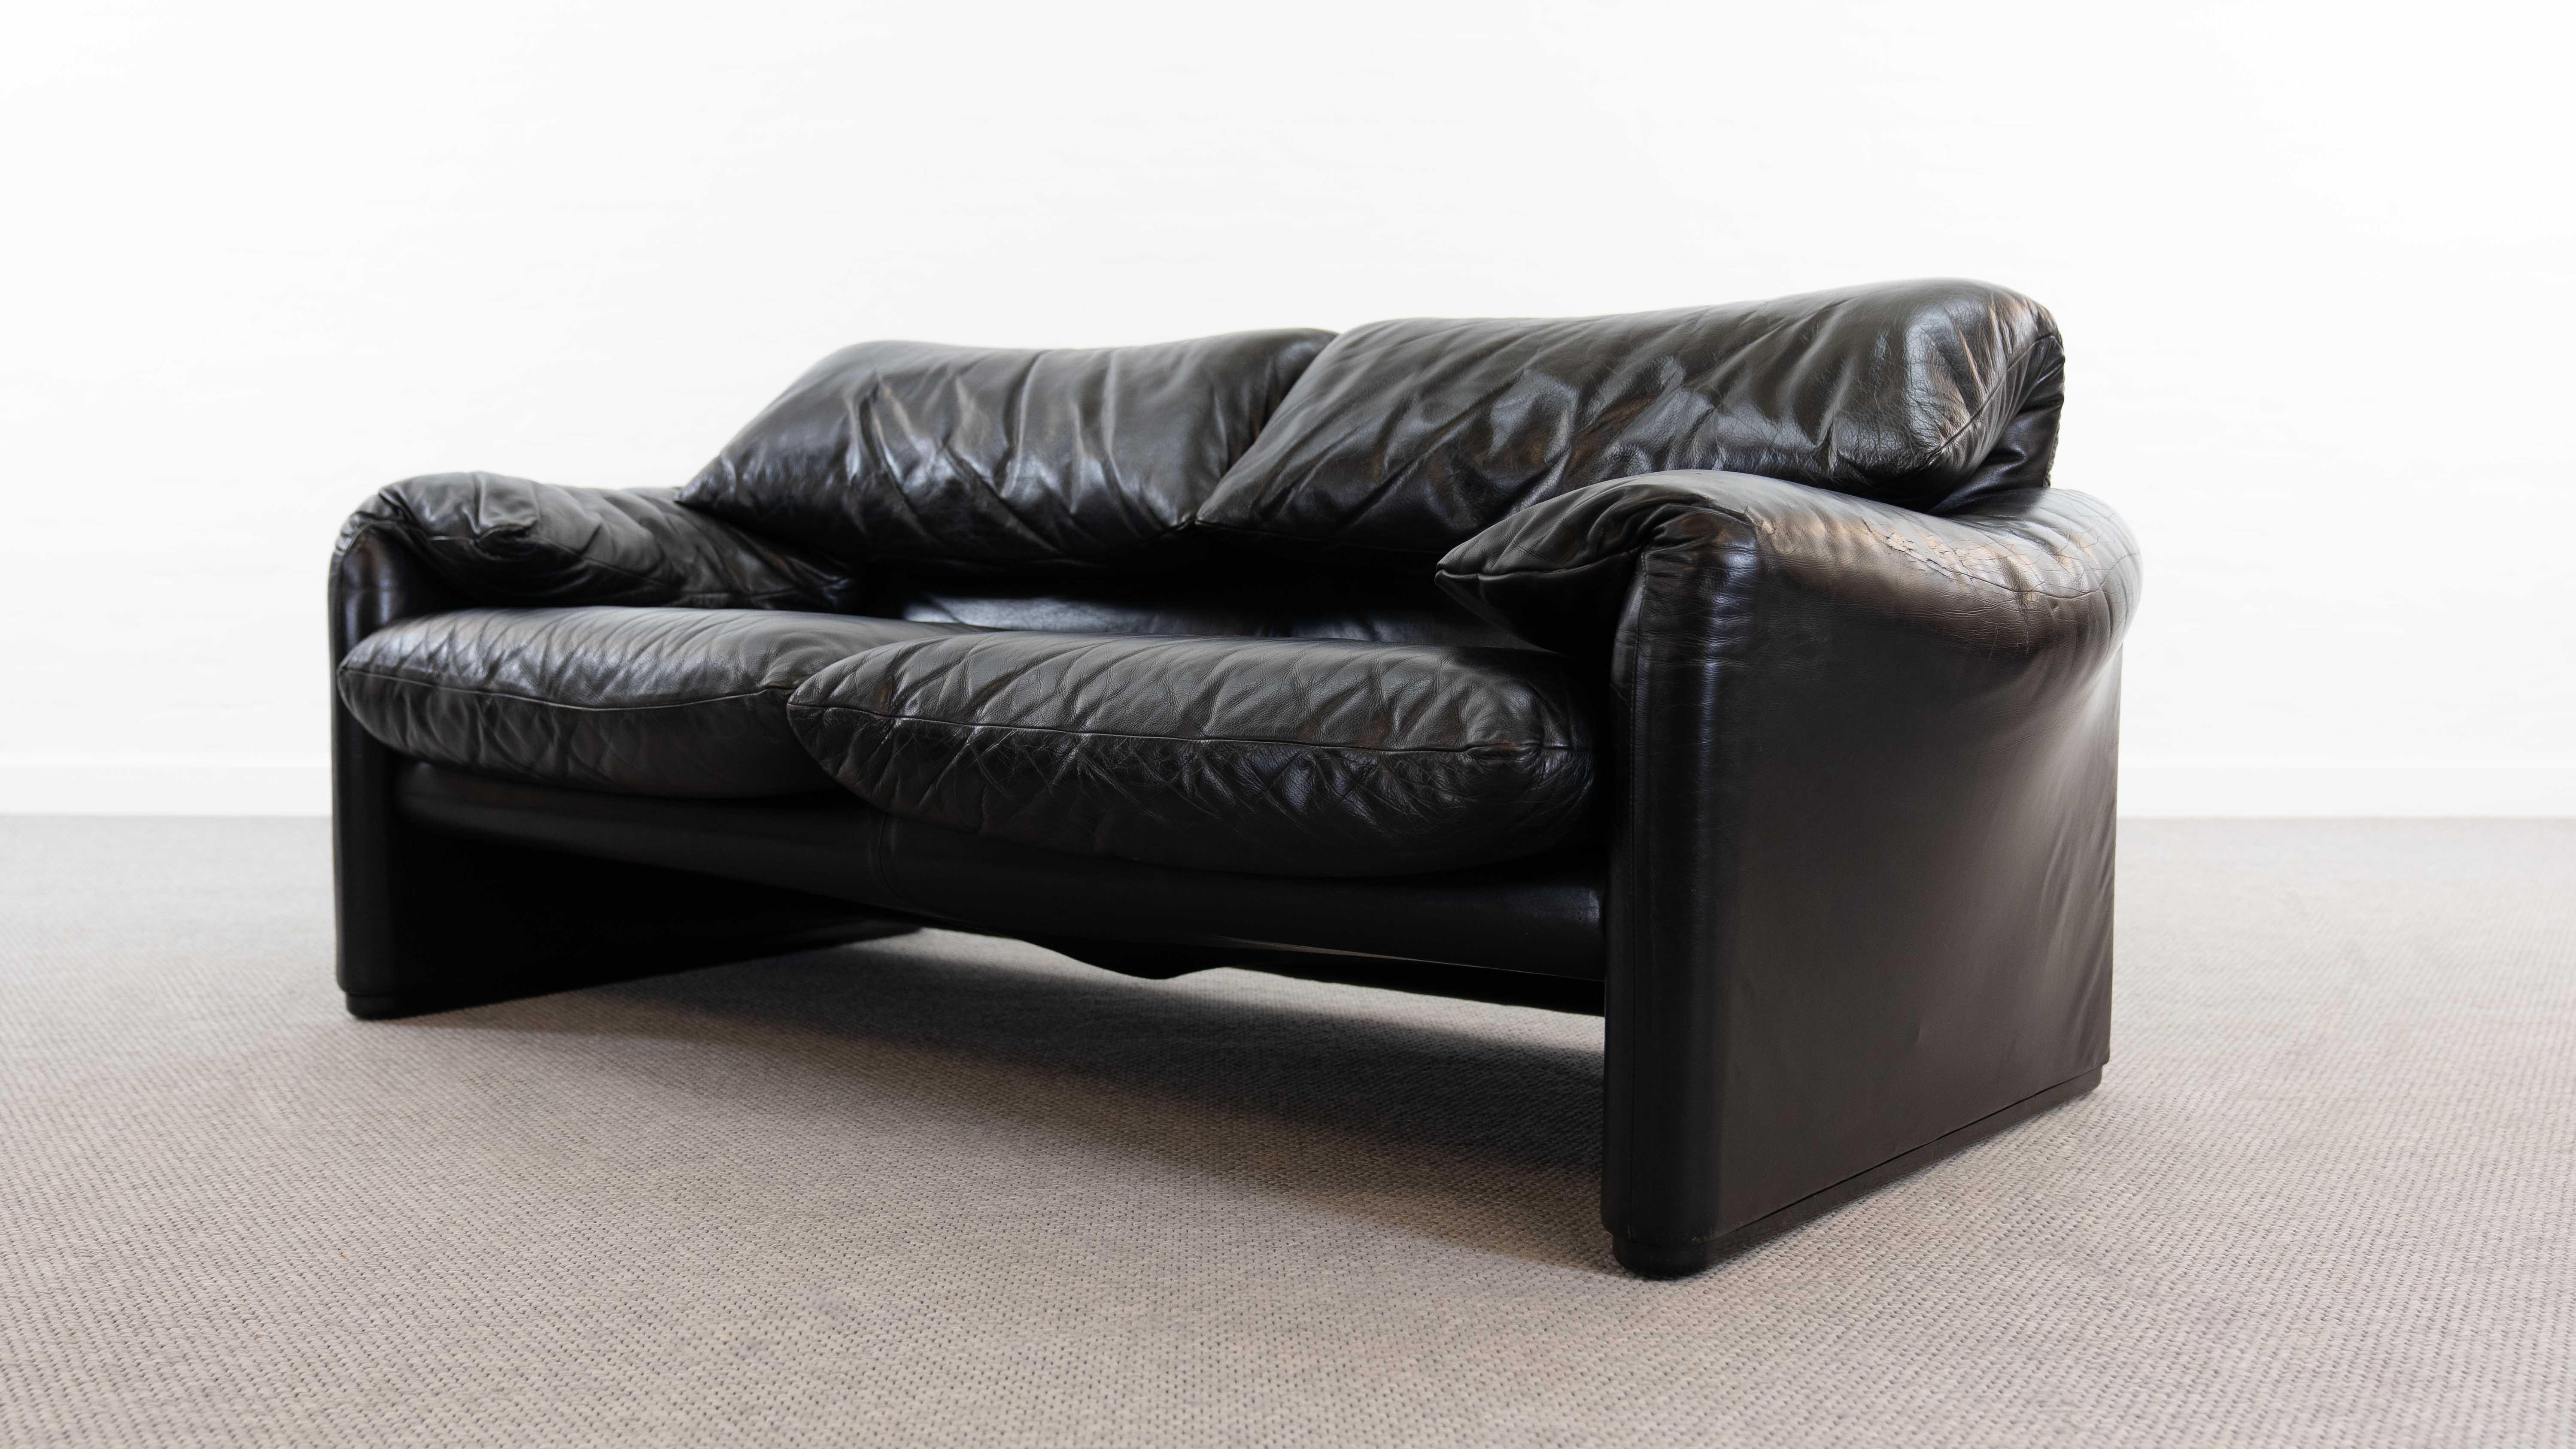 Maralunga 2-Seat Sofa in Black Leather by Vico Magistretti for Cassina, Italy 1